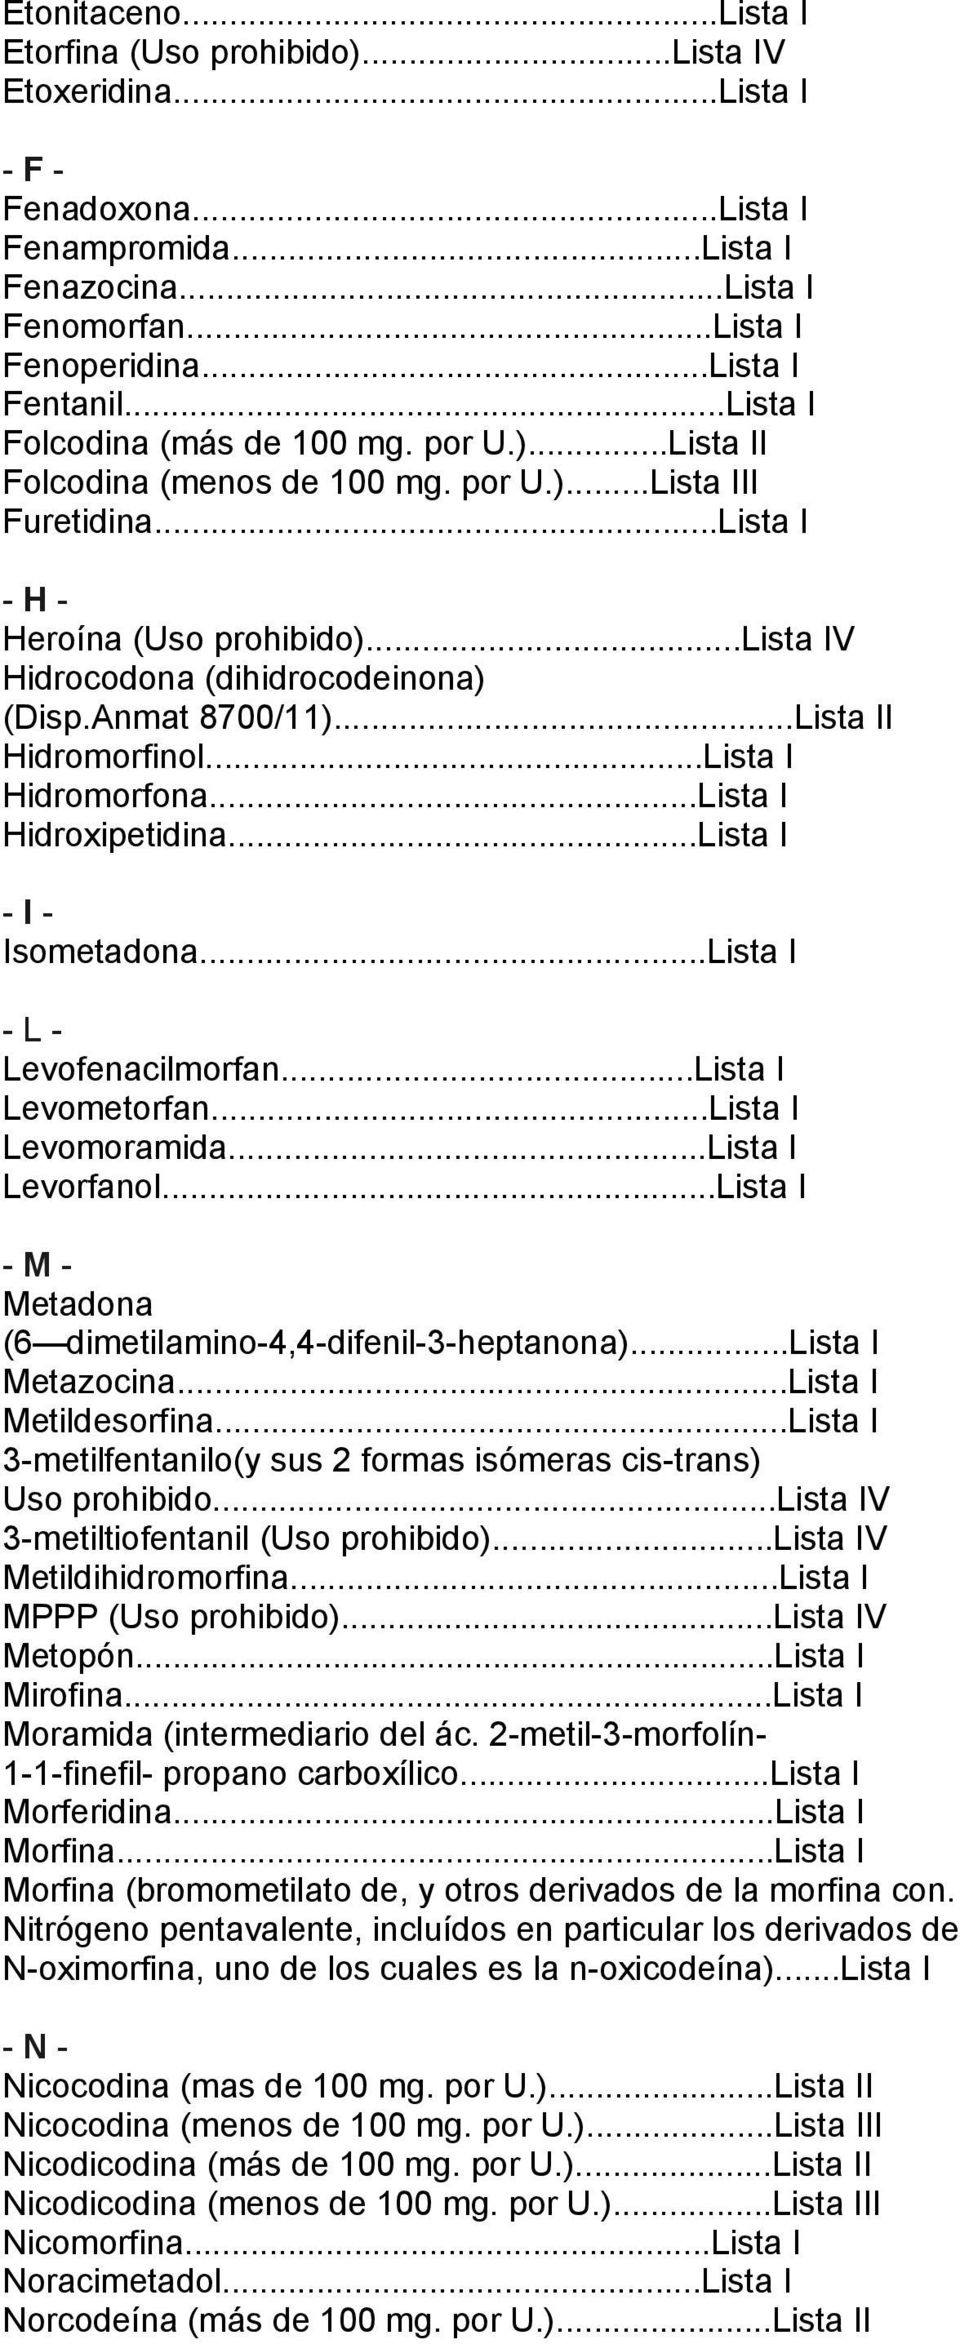 ..lista IV Hidrocodona (dihidrocodeinona) (Disp.Anmat 8700/11)...Lista II Hidromorfinol...Lista I Hidromorfona...Lista I Hidroxipetidina...Lista I - I - Isometadona...Lista I - L - Levofenacilmorfan.